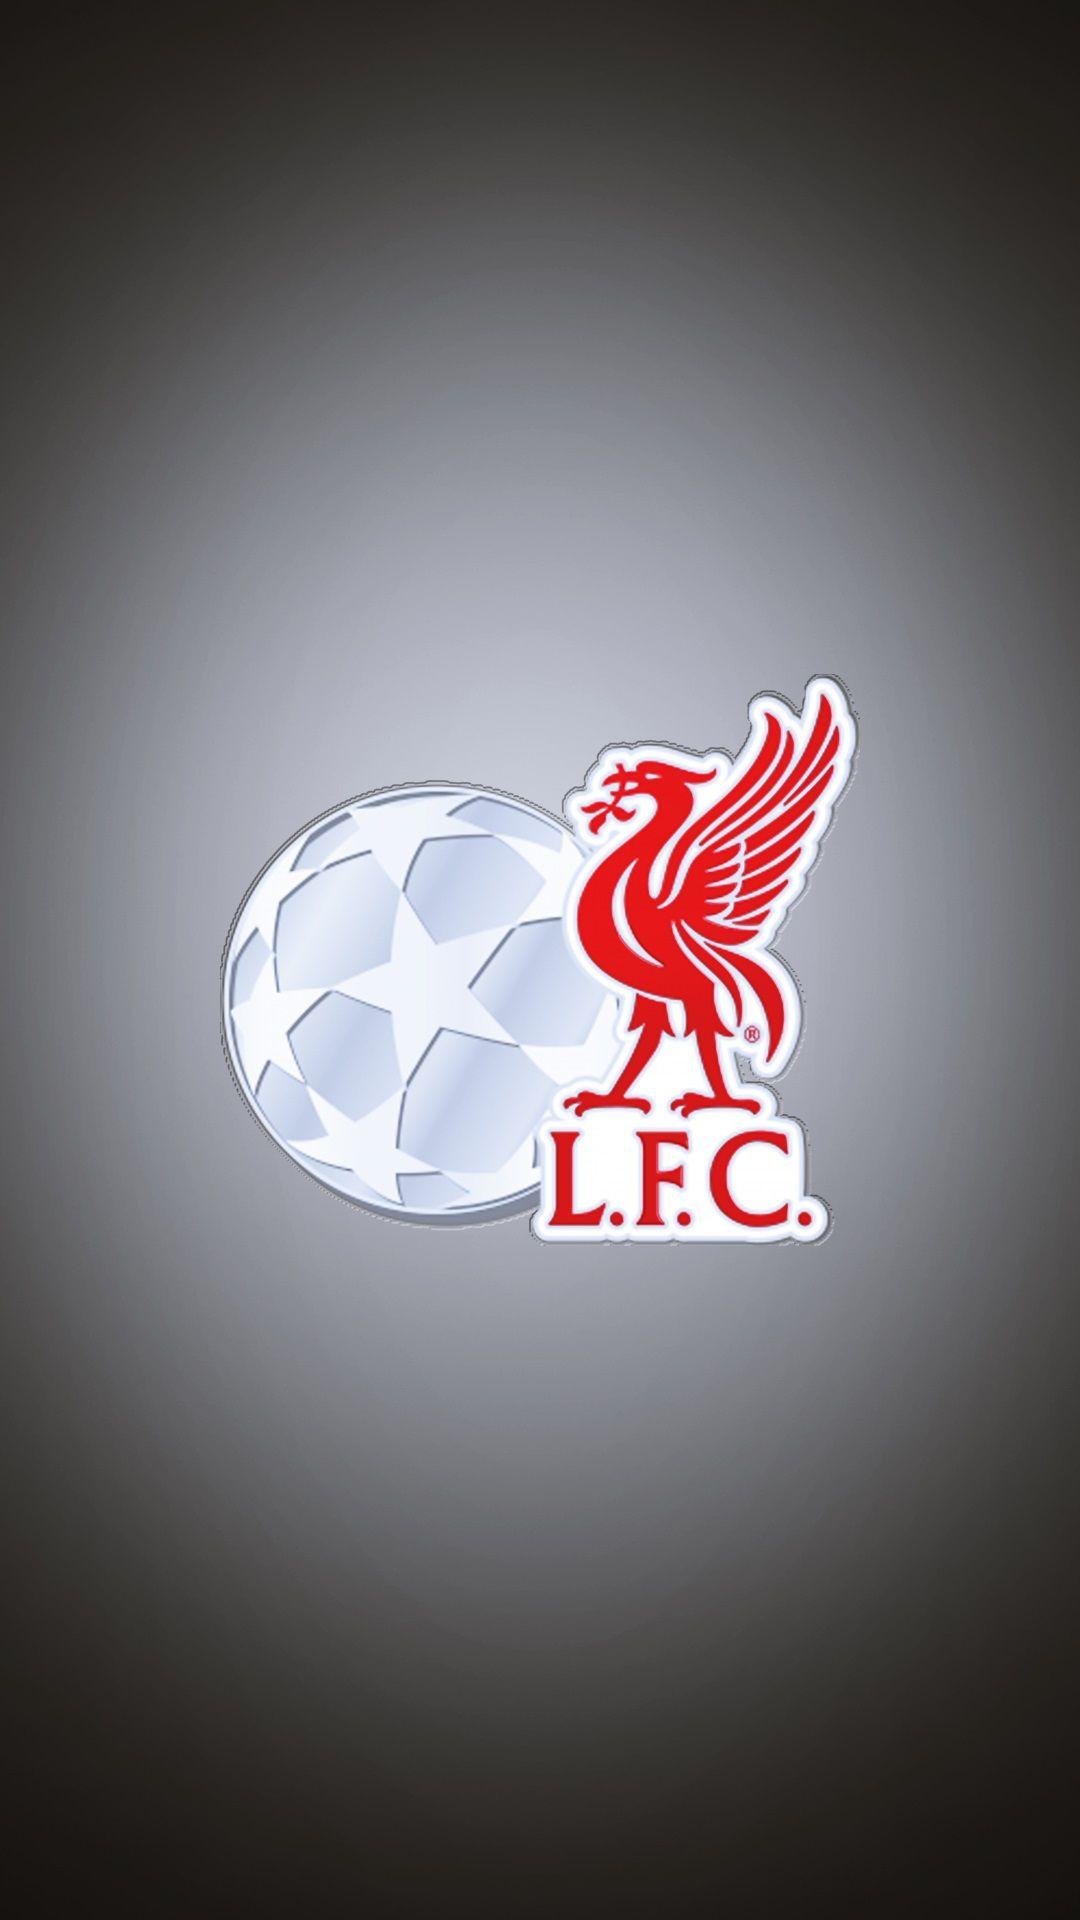 Liverpool Football Club. Liverpool